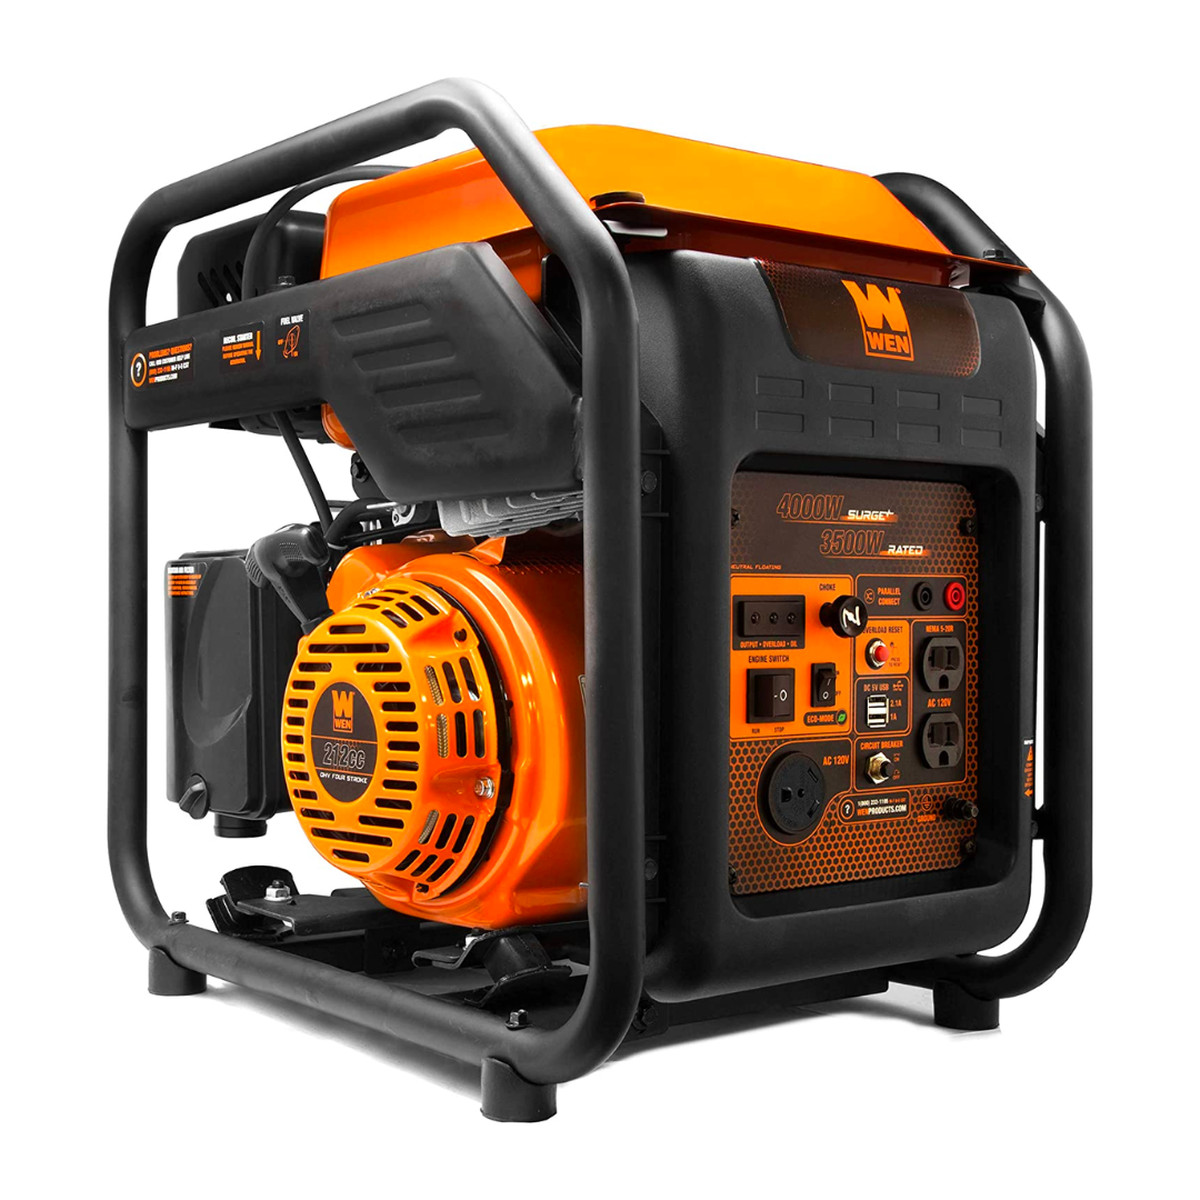 Black and orange WEN open frame inverter generator